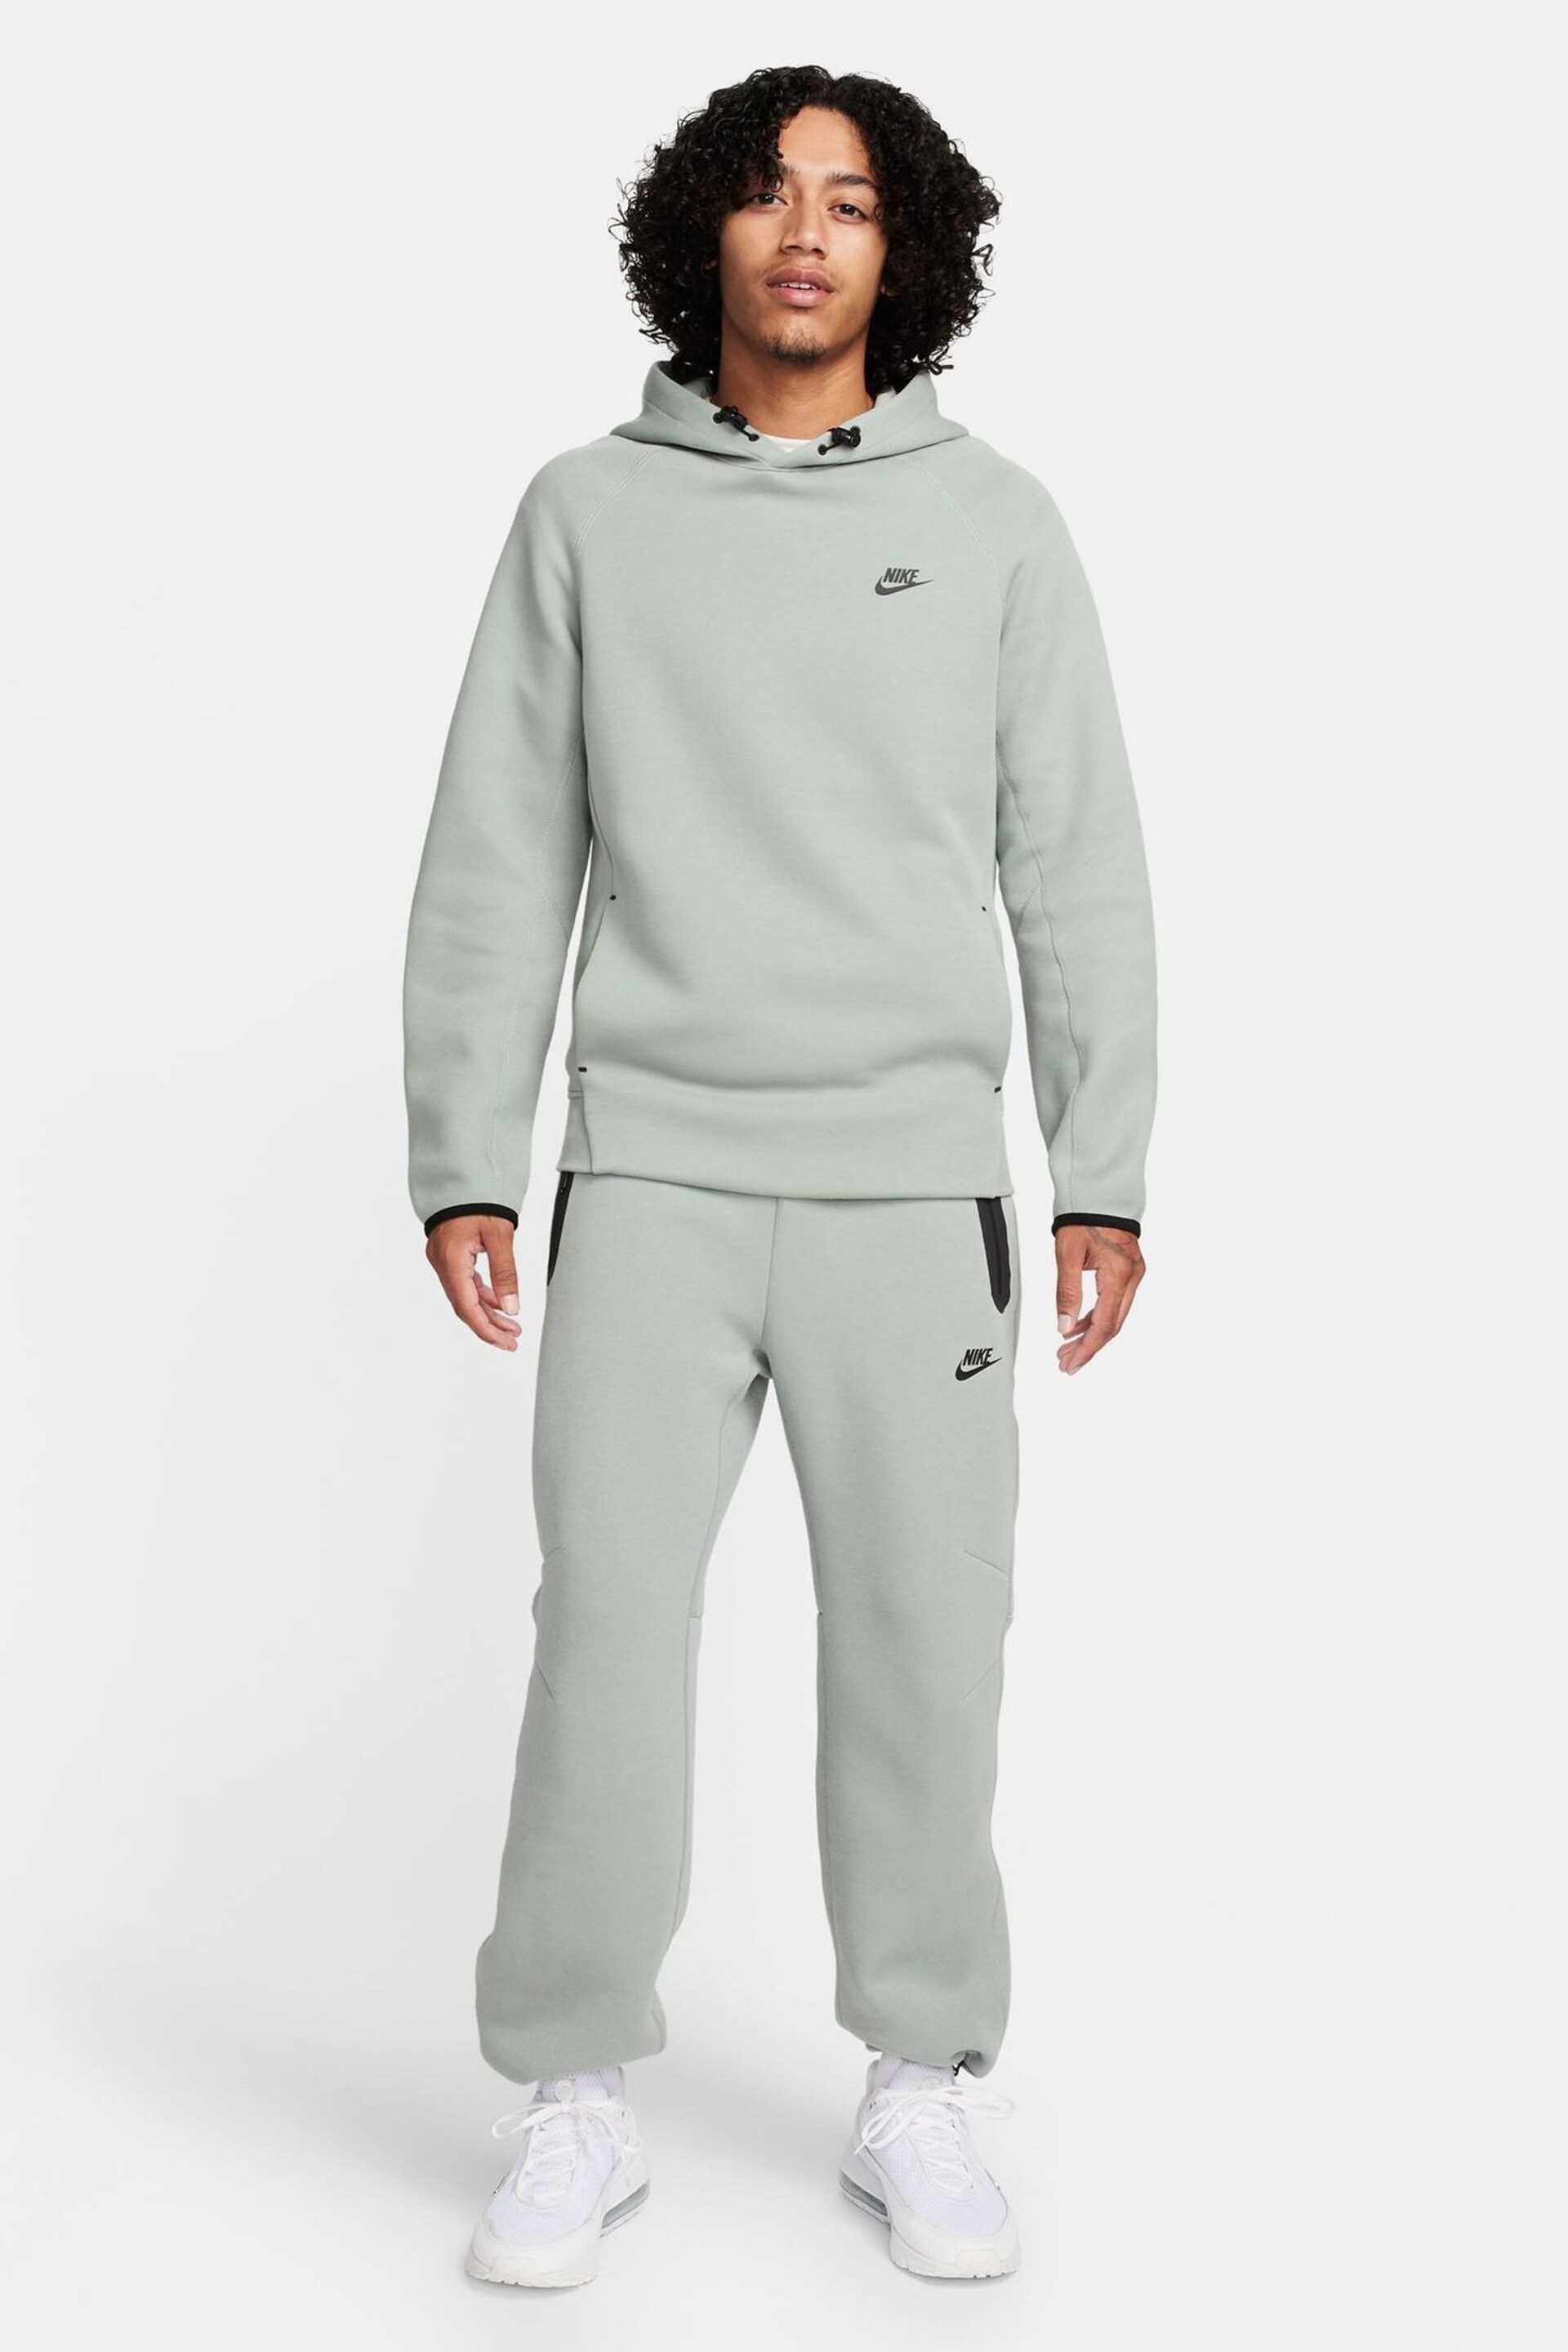 Nike Green Tech Fleece Pullover Hoodie - Image 3 of 10